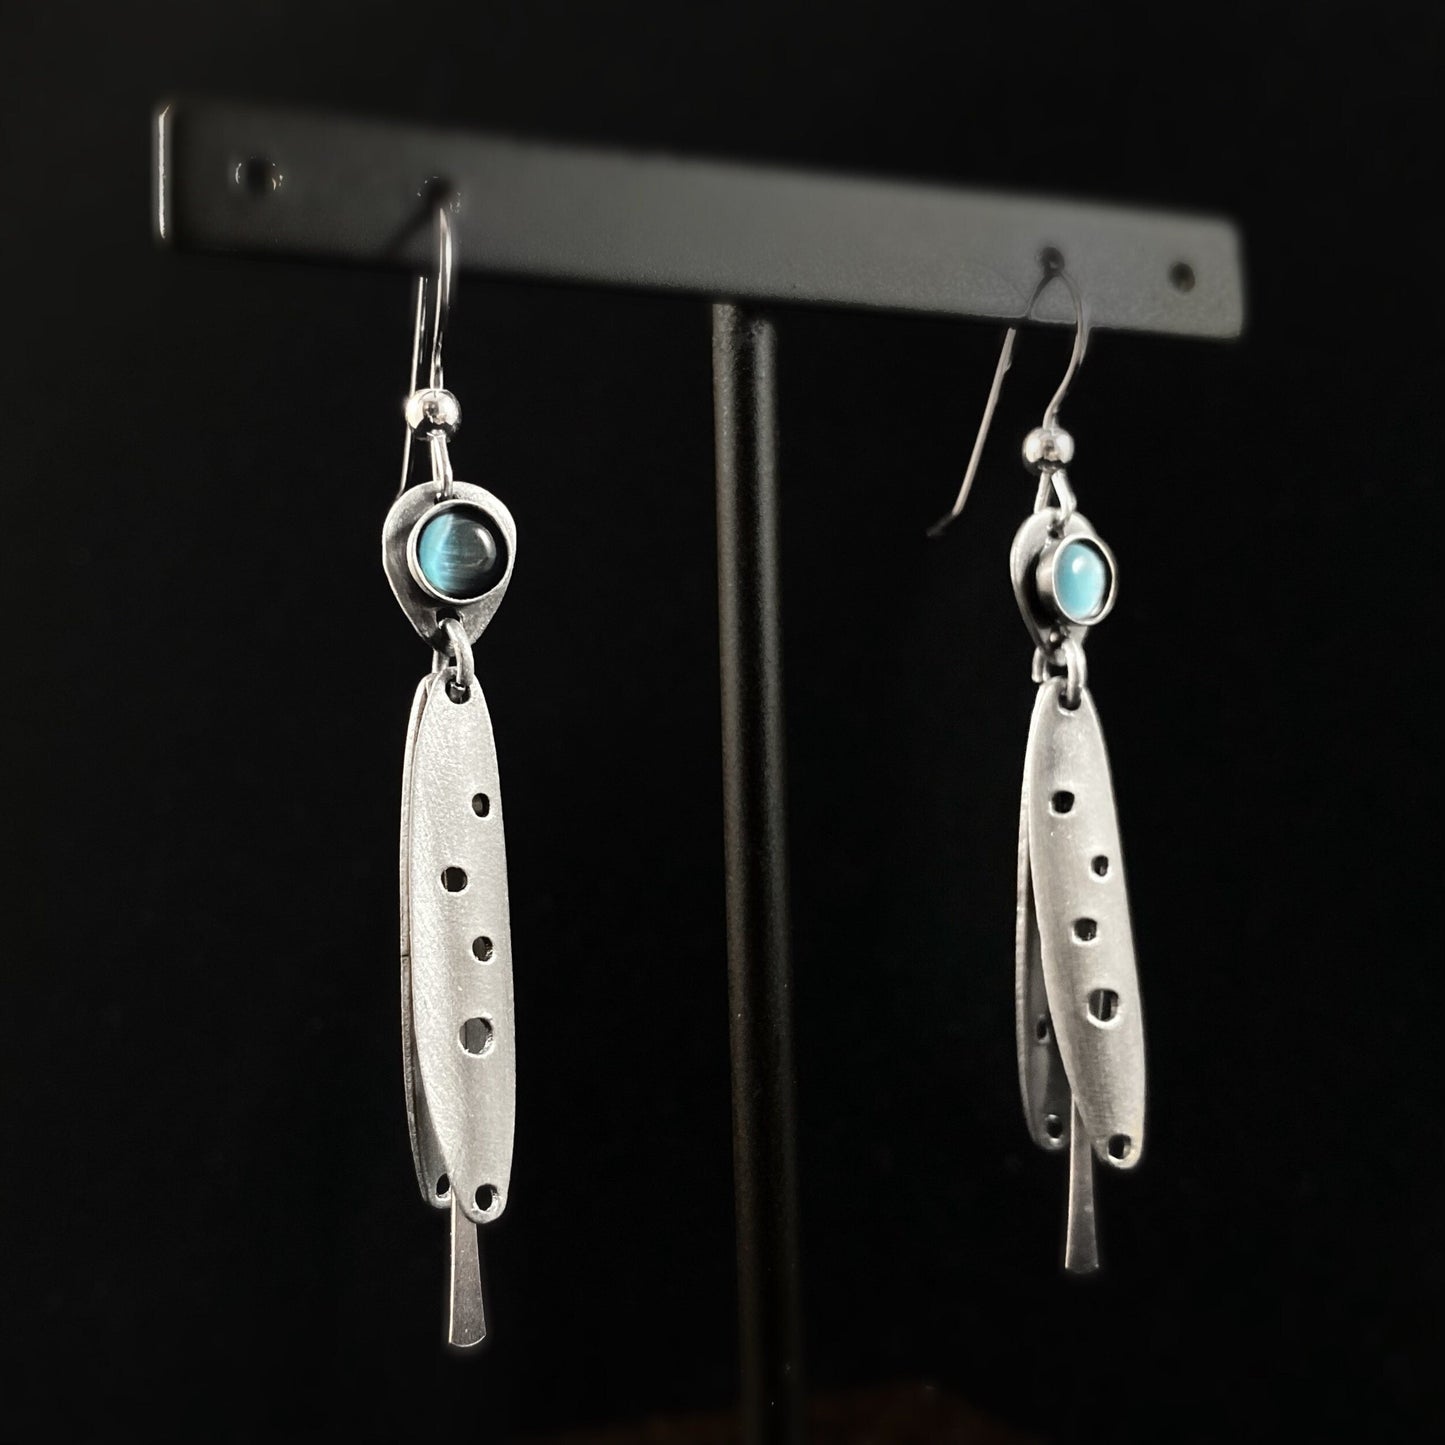 Lightweight Handmade Geometric Aluminum Earrings, Silver and Blue